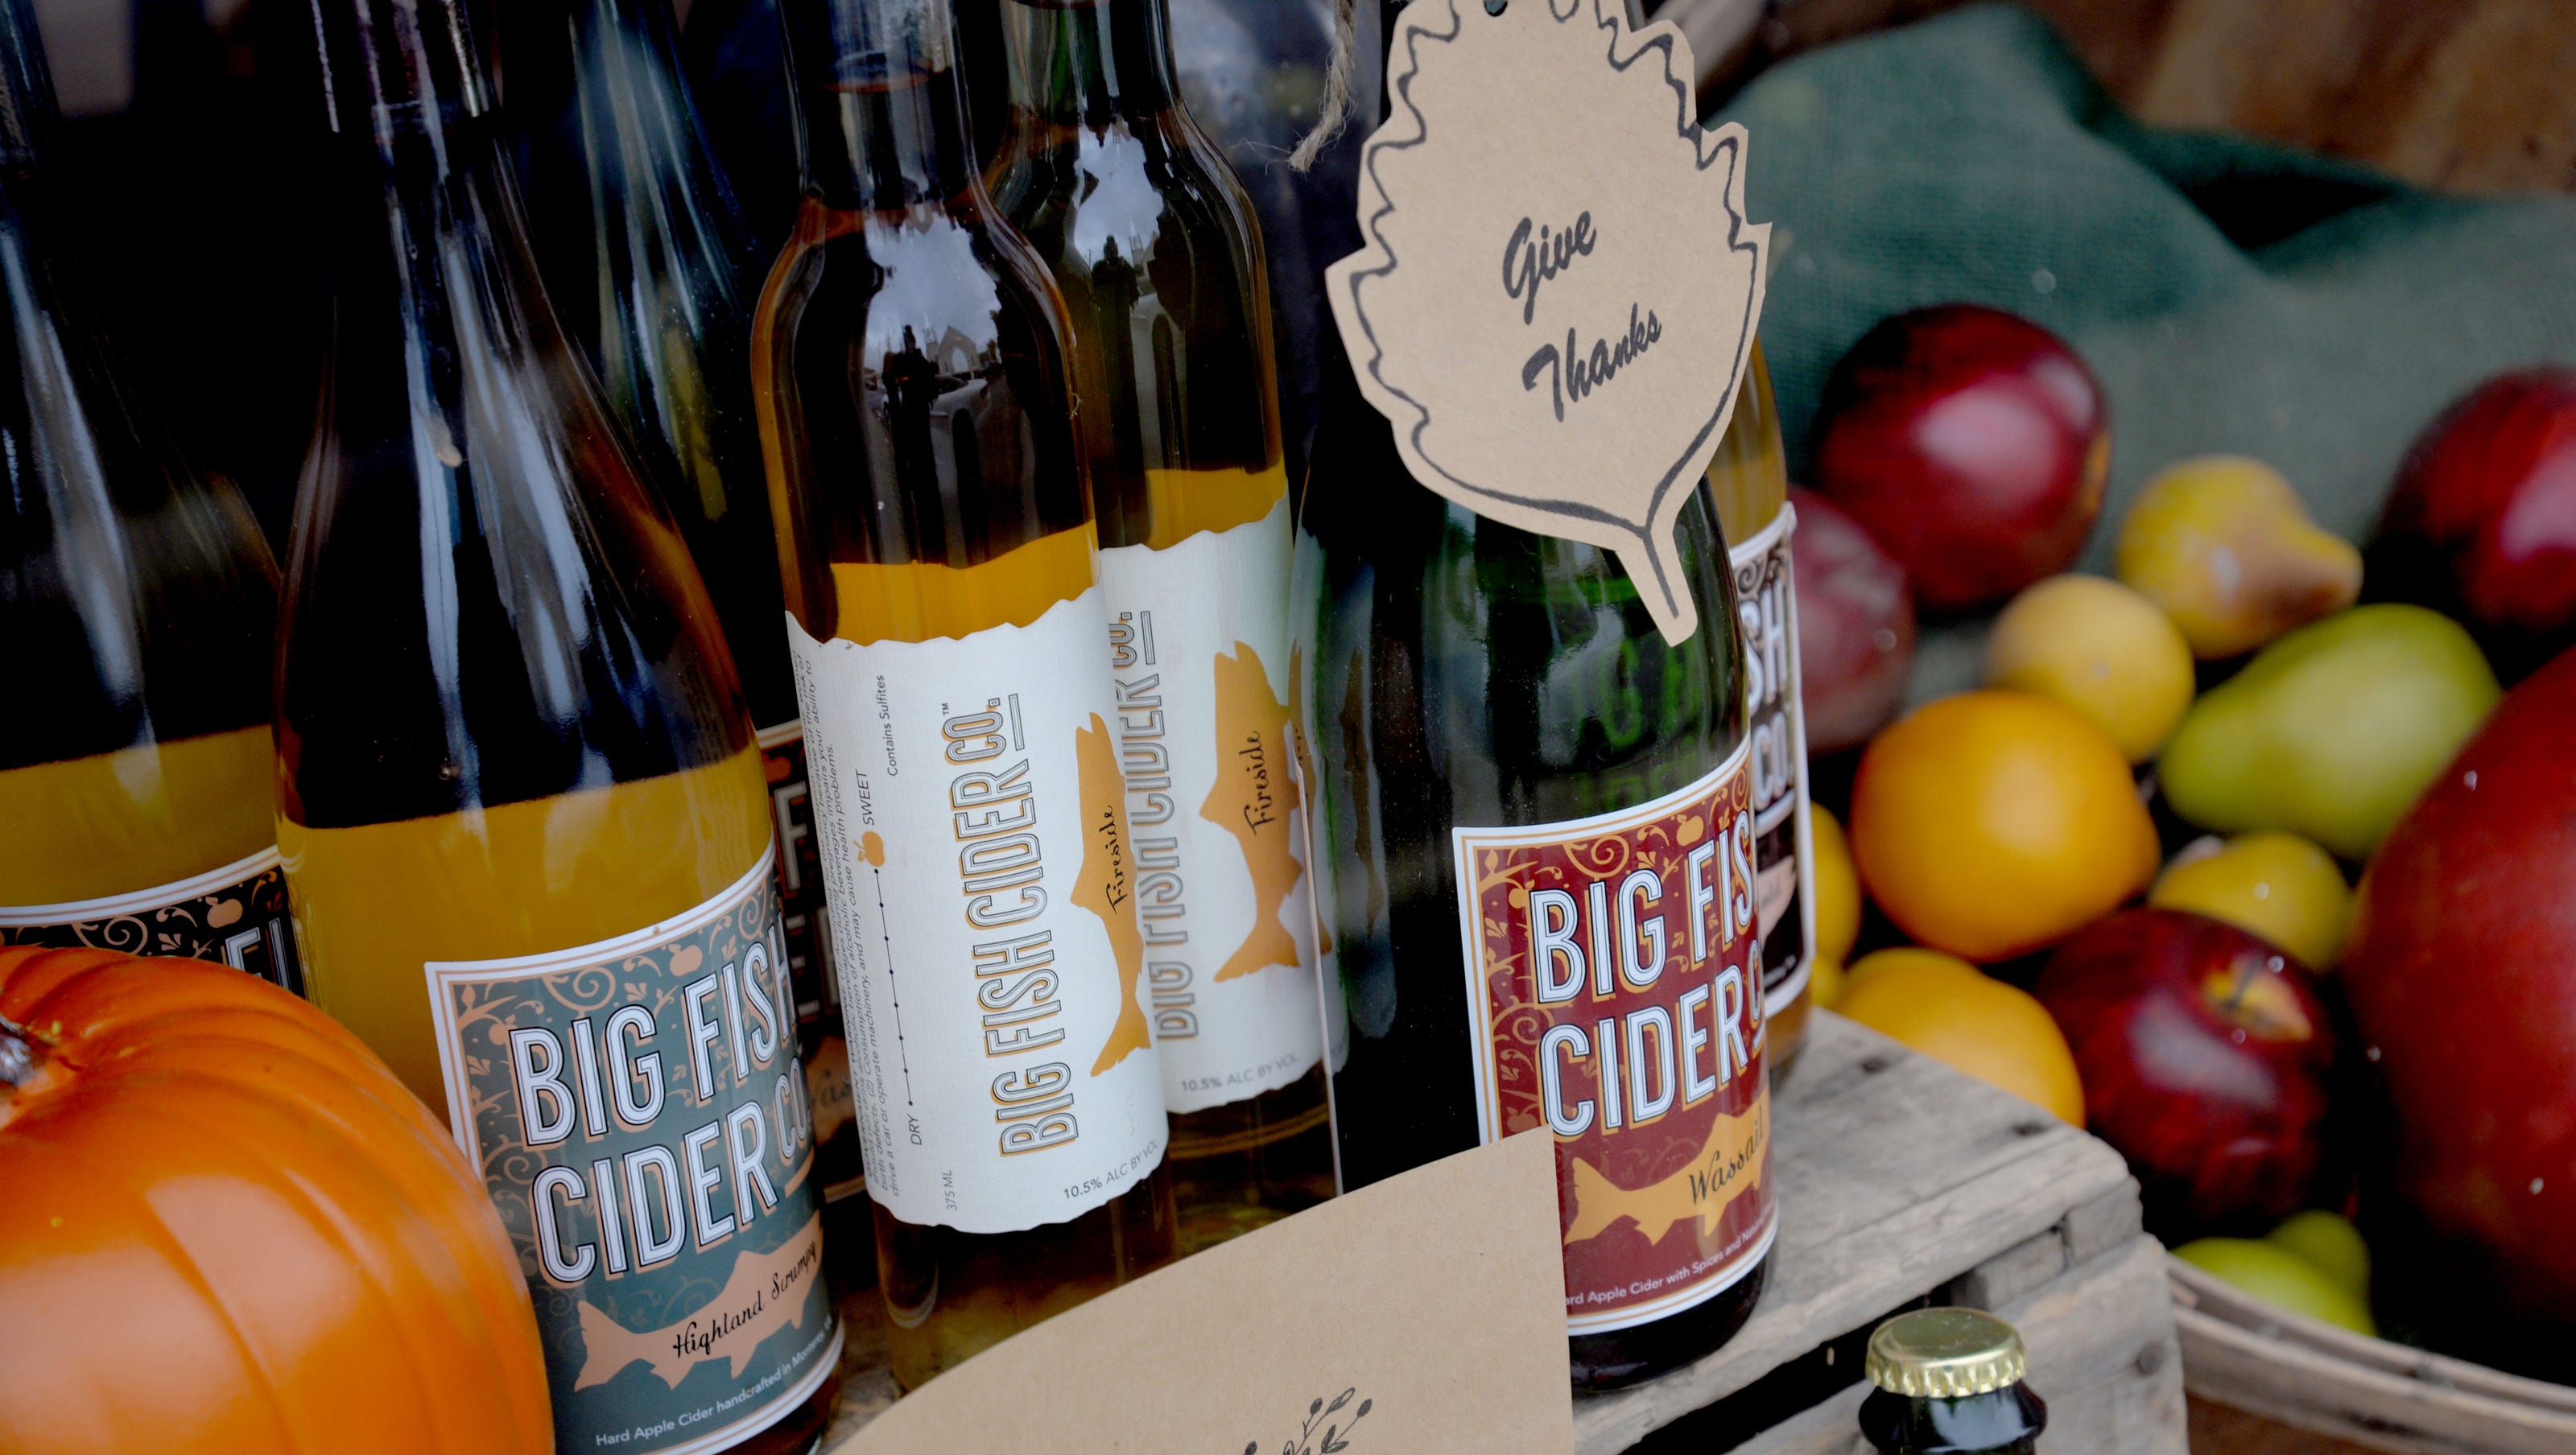  Small town, big cider: Monterey's Big Fish Cider 